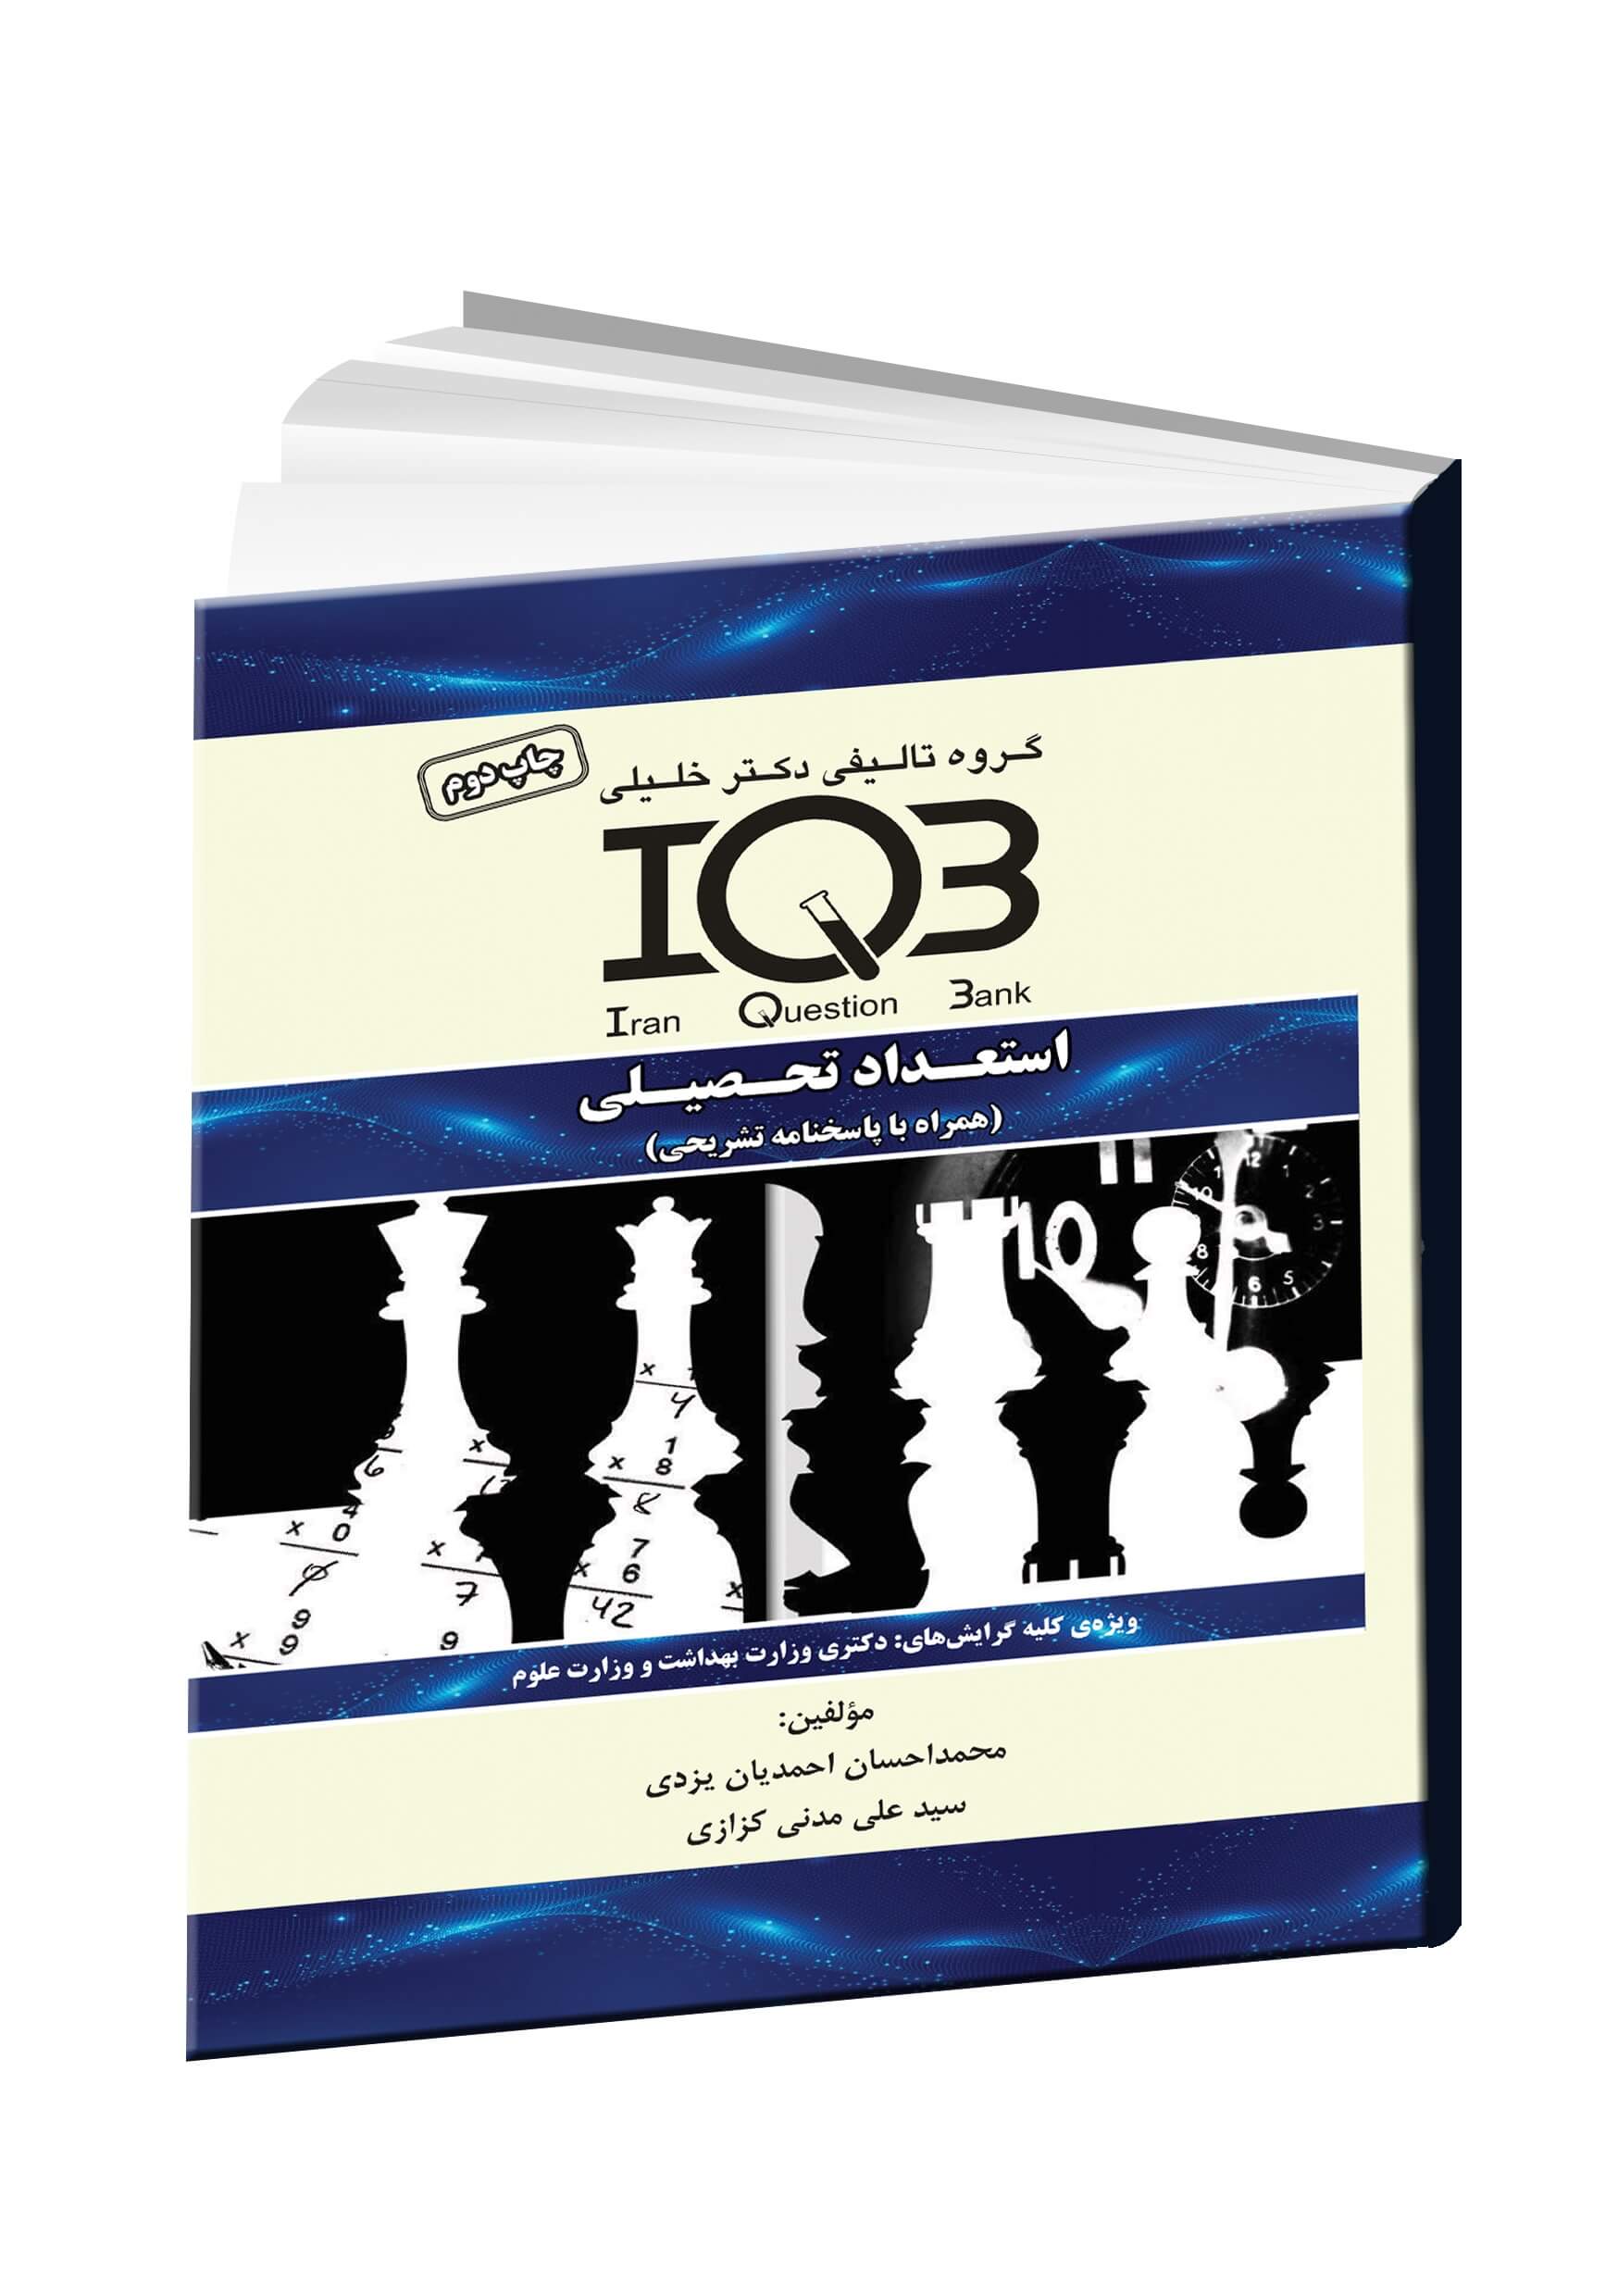 IQB استعداد تحصیلی